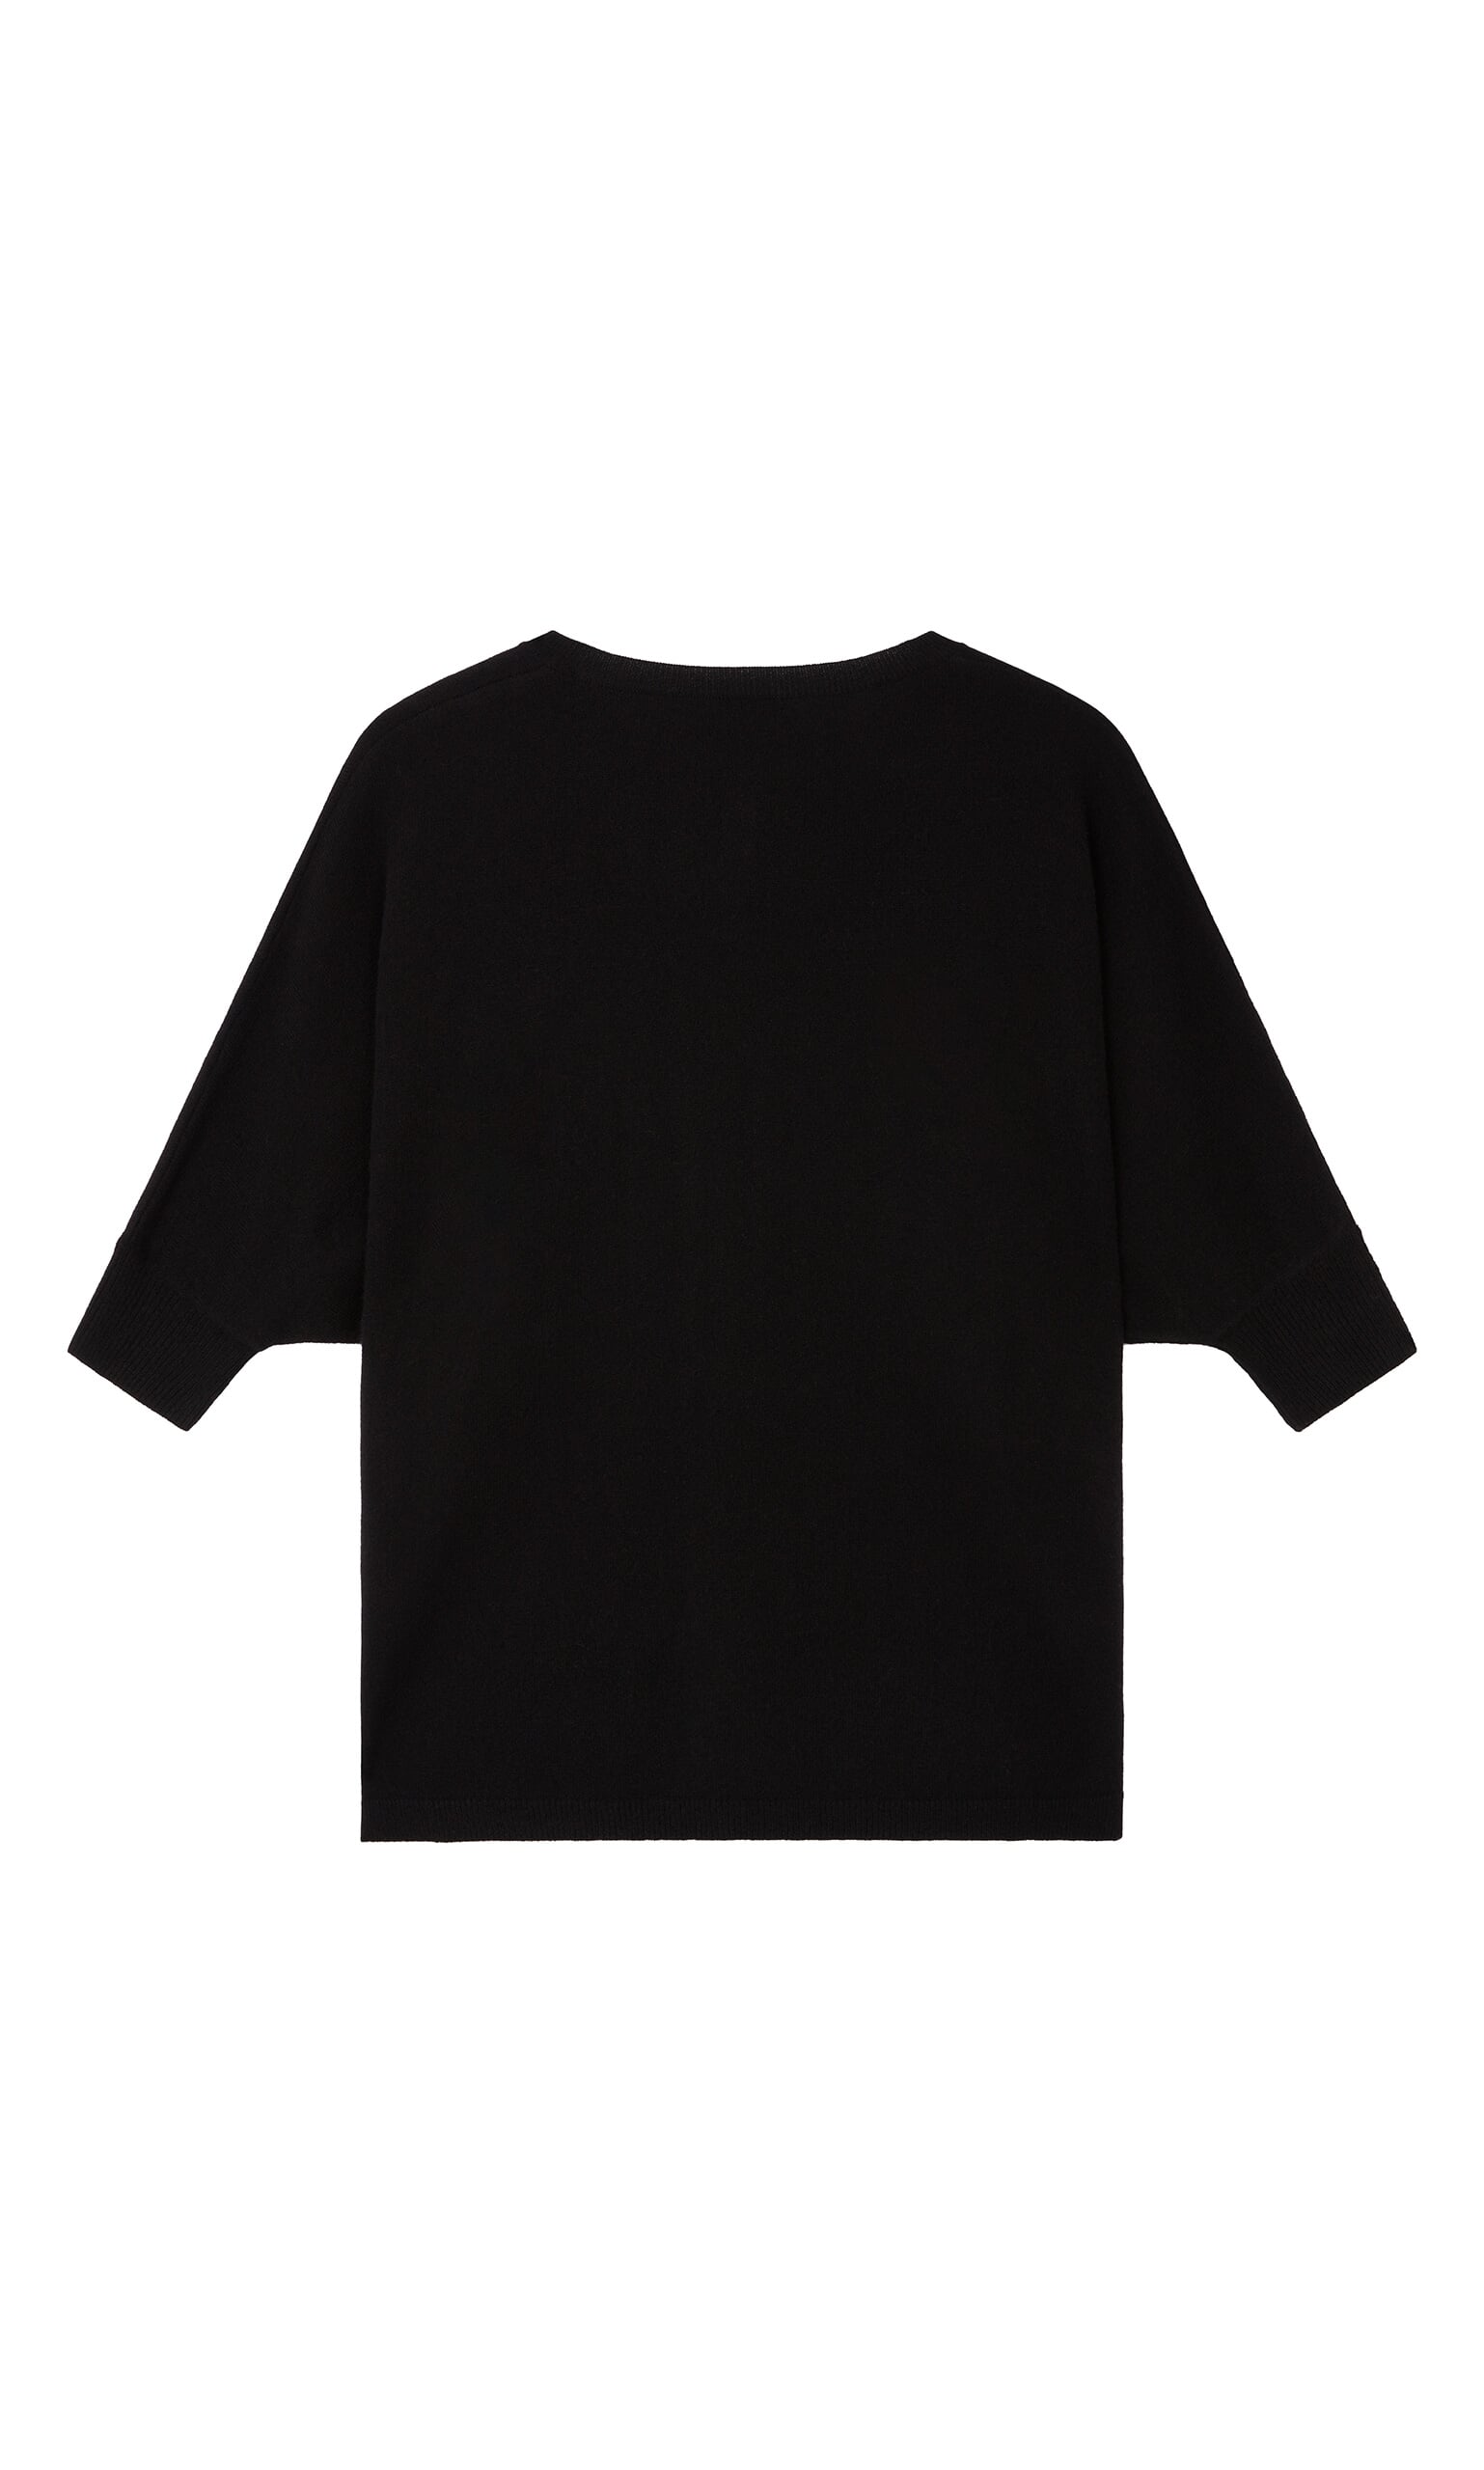 Fashion - Tops and Shirts - Plümo Ltd